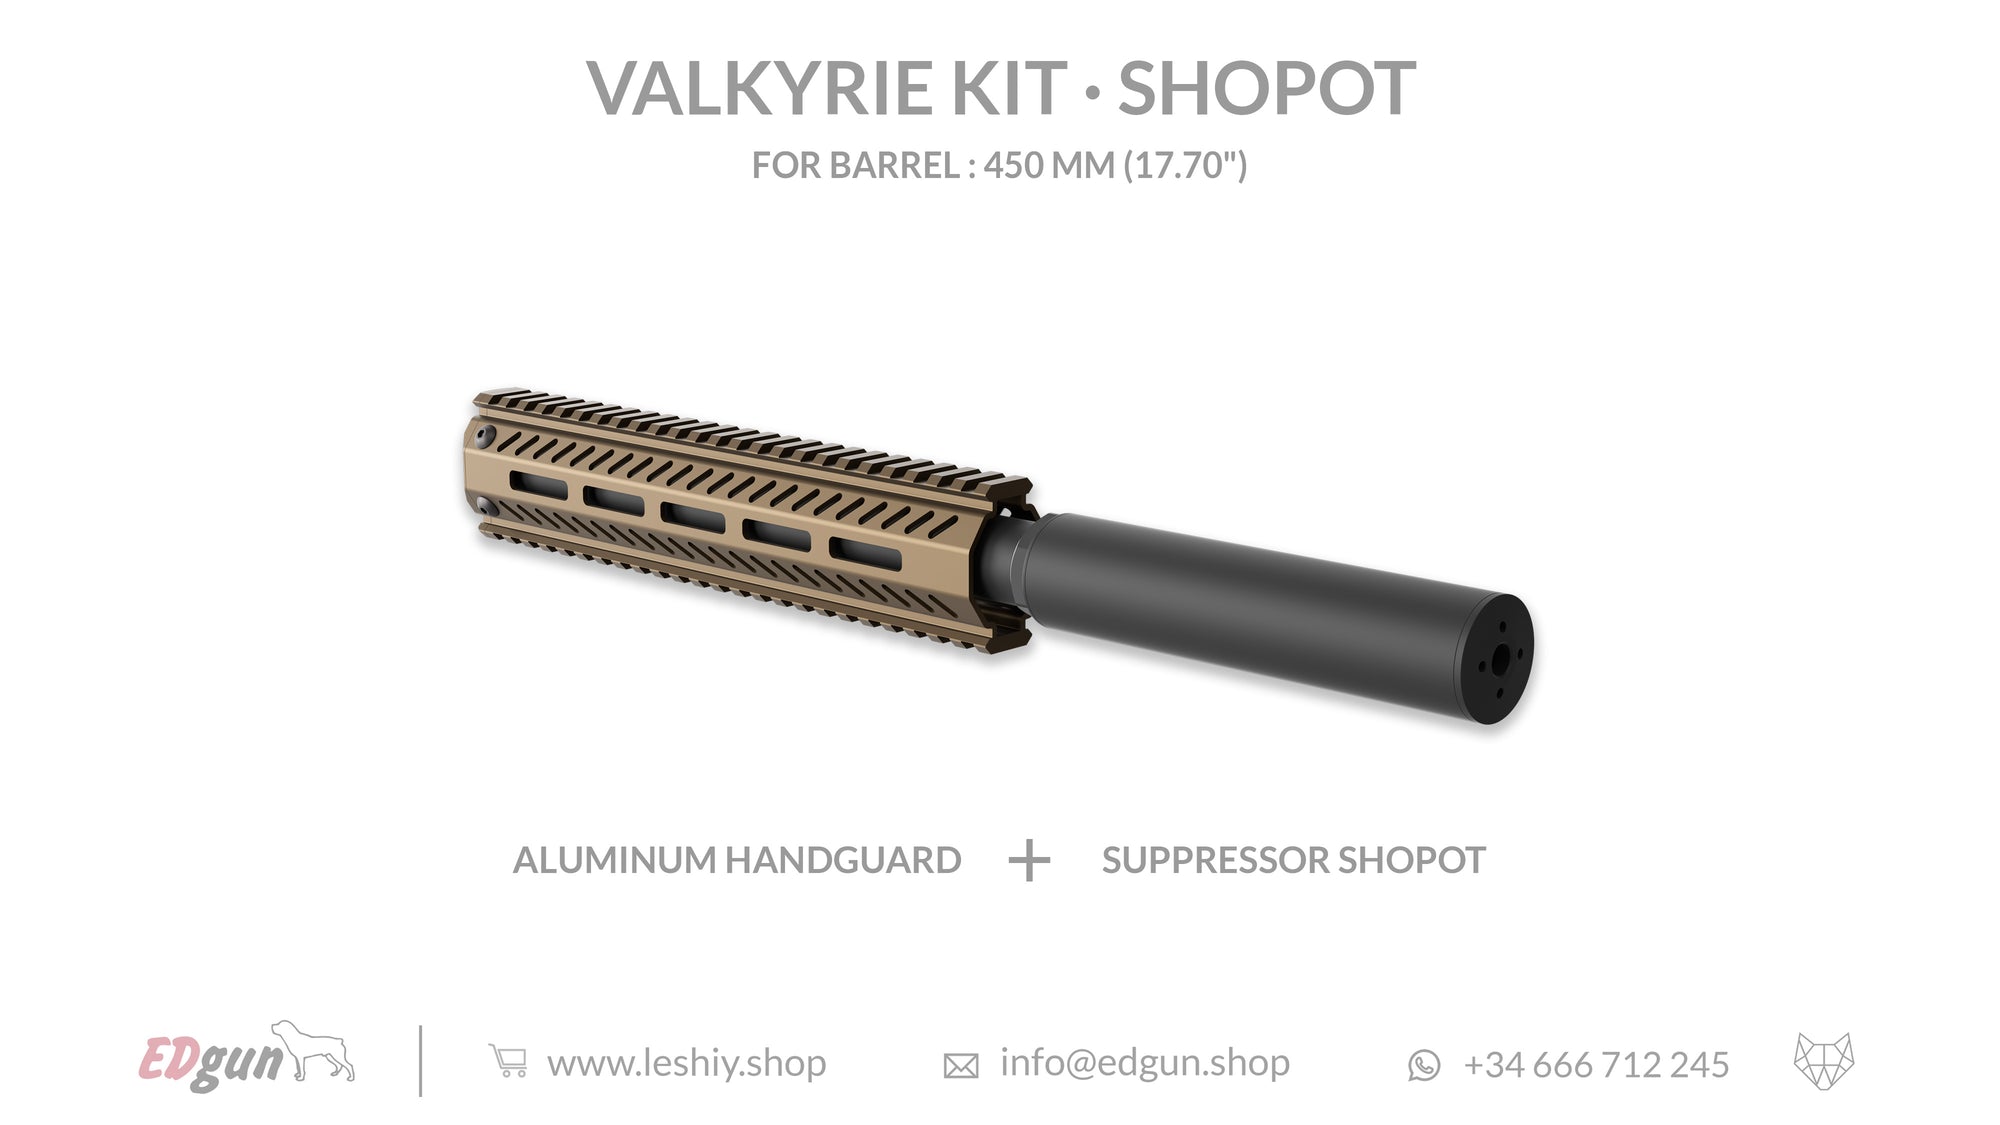 Shopot Valkyrie Kit for barrel 450mm (17.70¨)